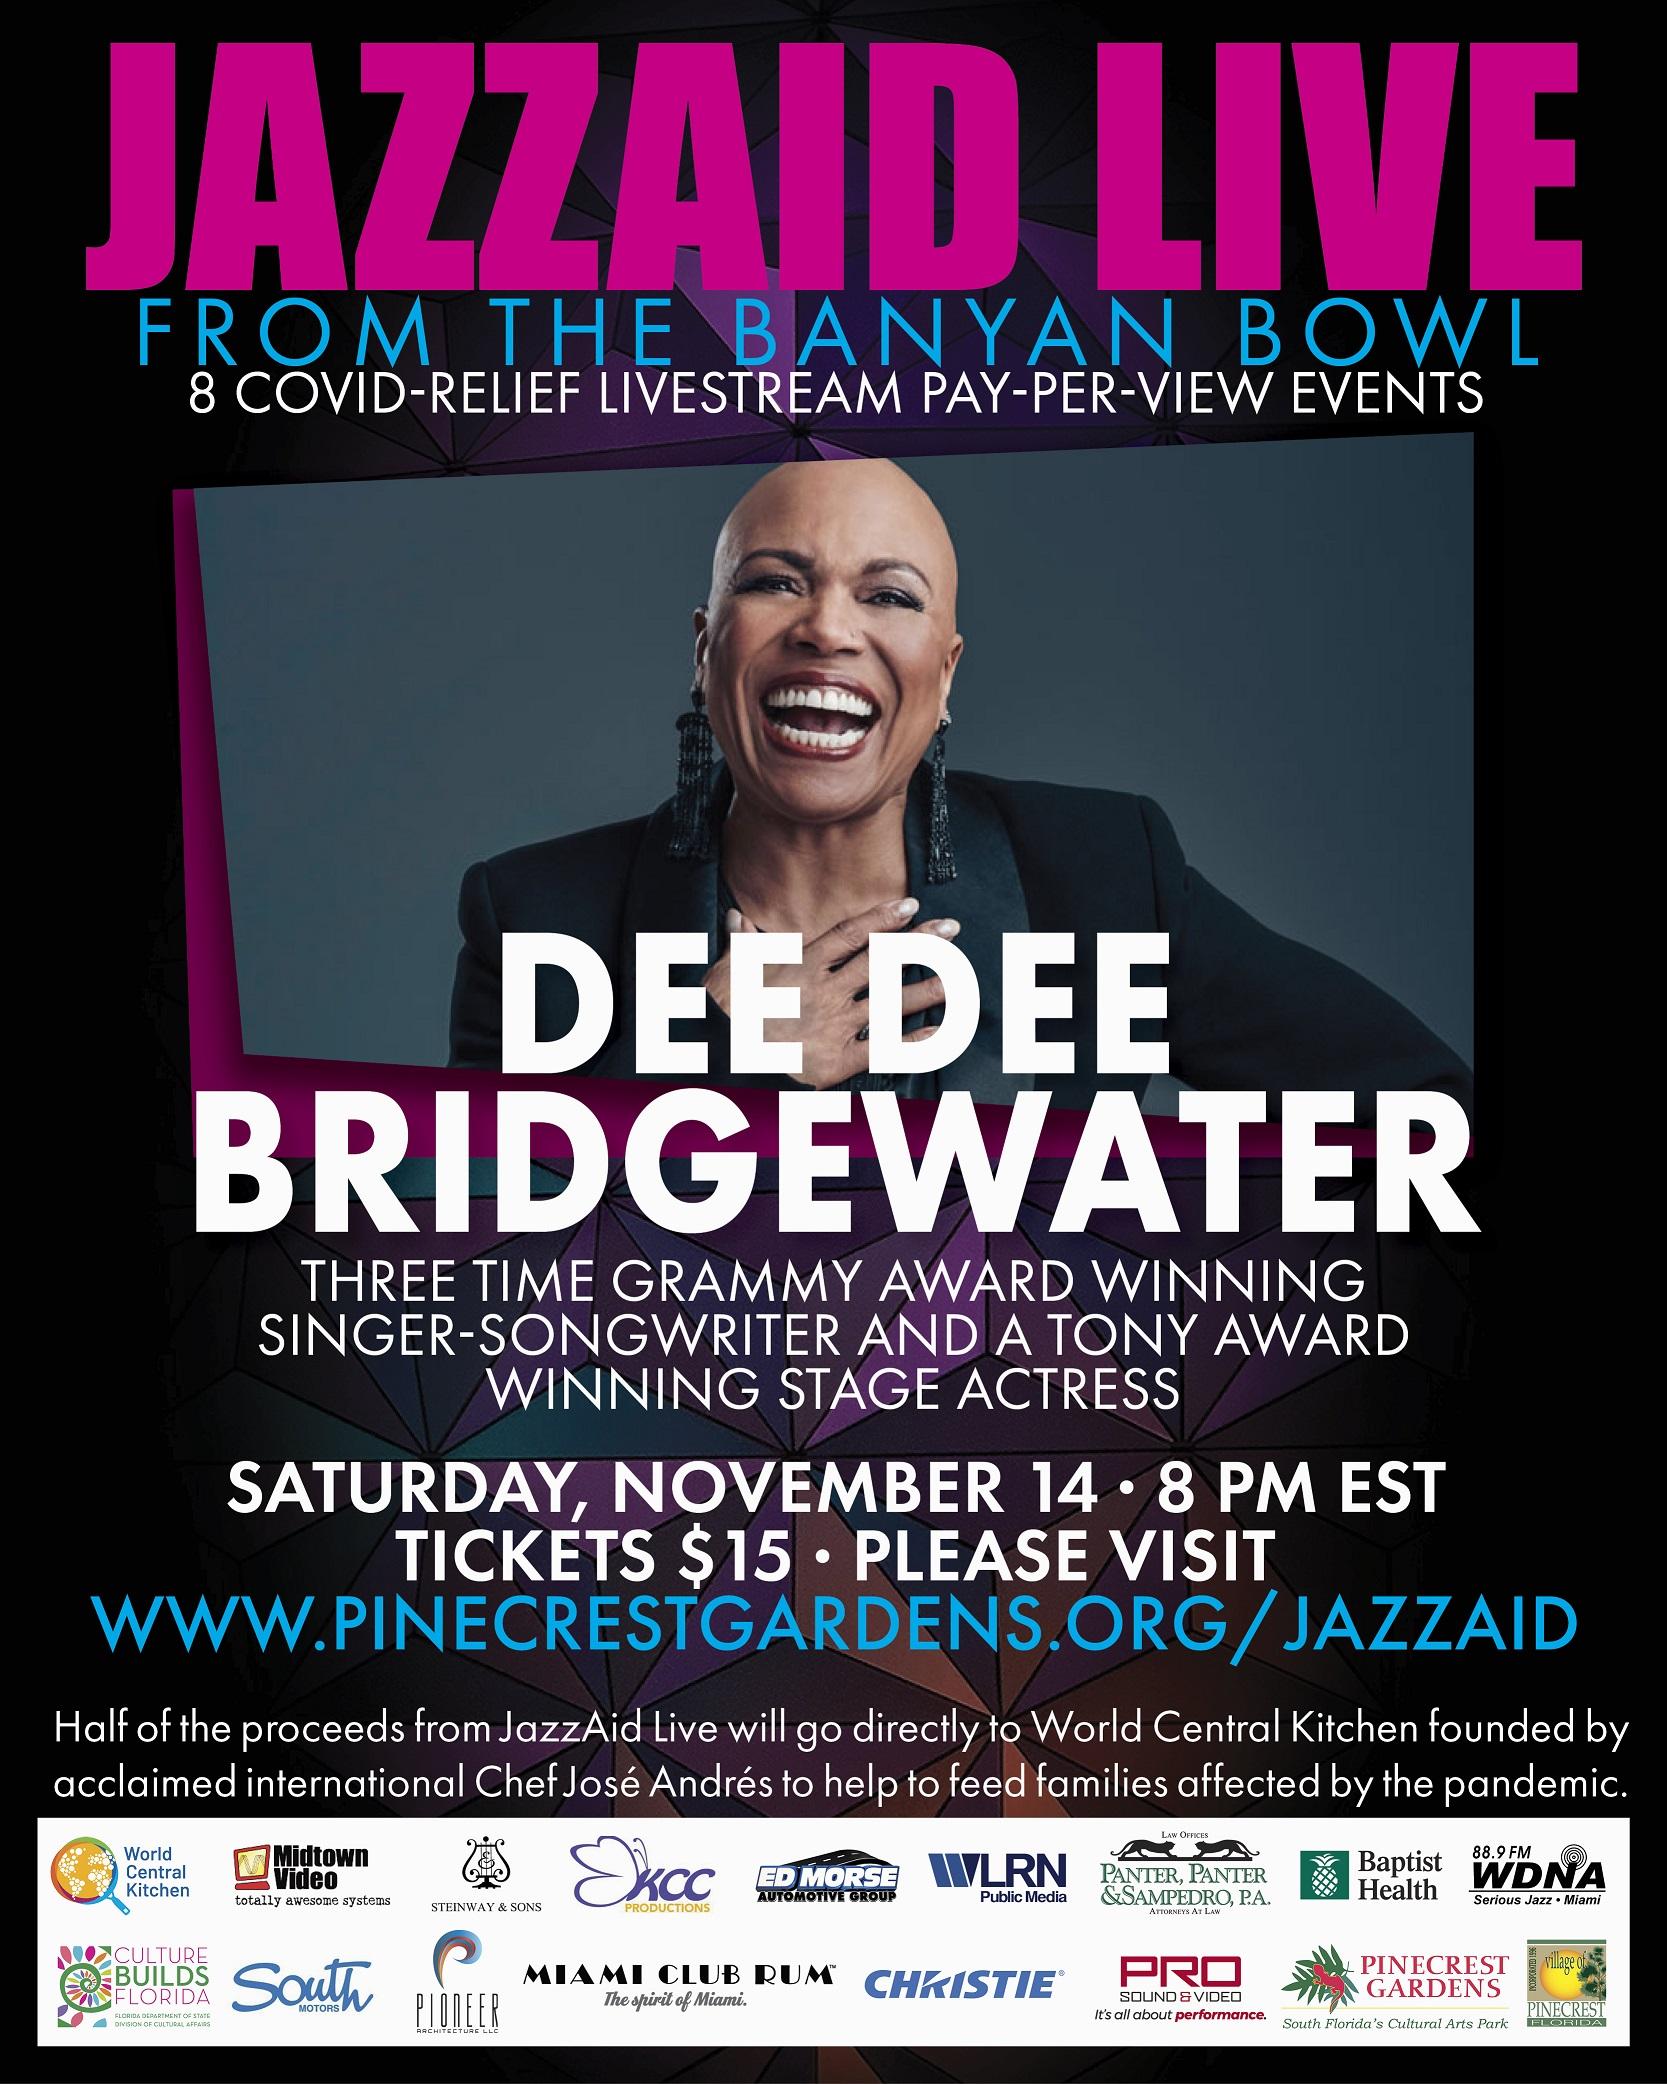 Pinecrest Gardens presents "Banyan Bowl Live" featuring Dee Dee Bridgewater